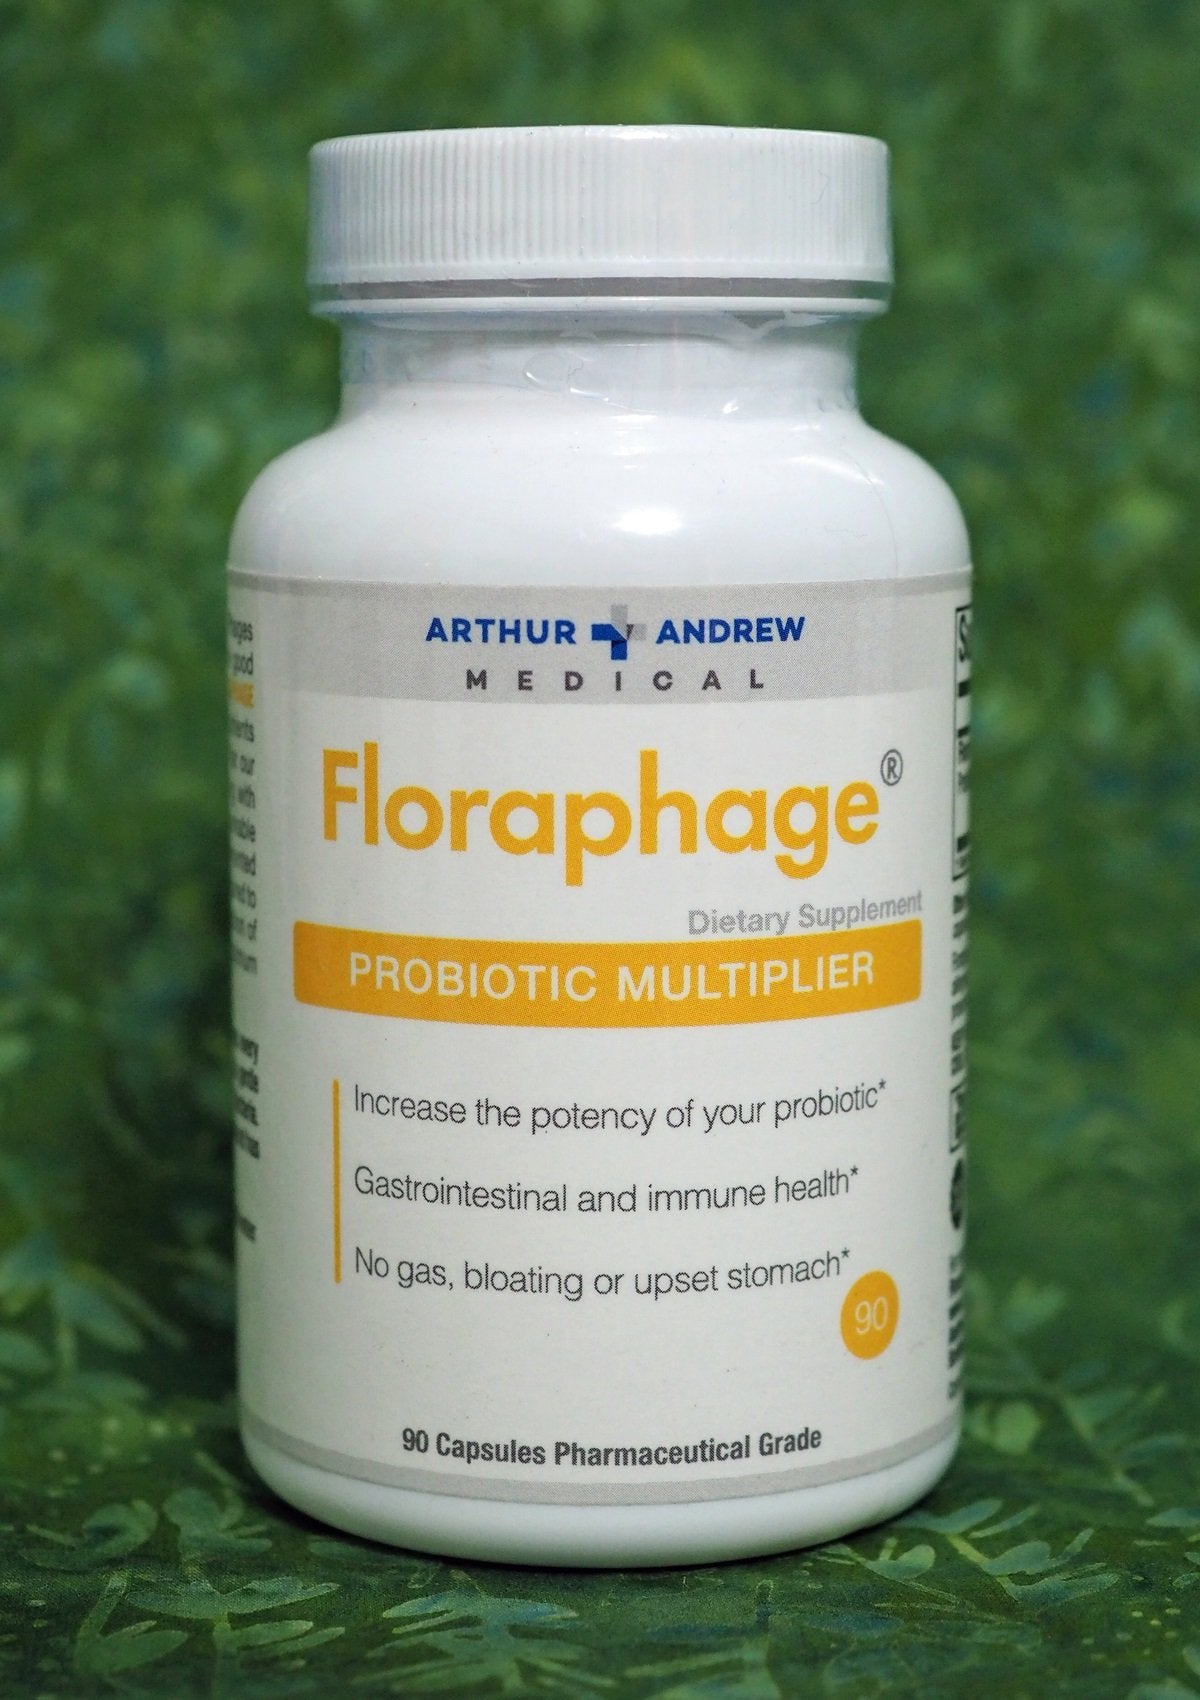 Floraphage, A Phage Probiotic Multiplier